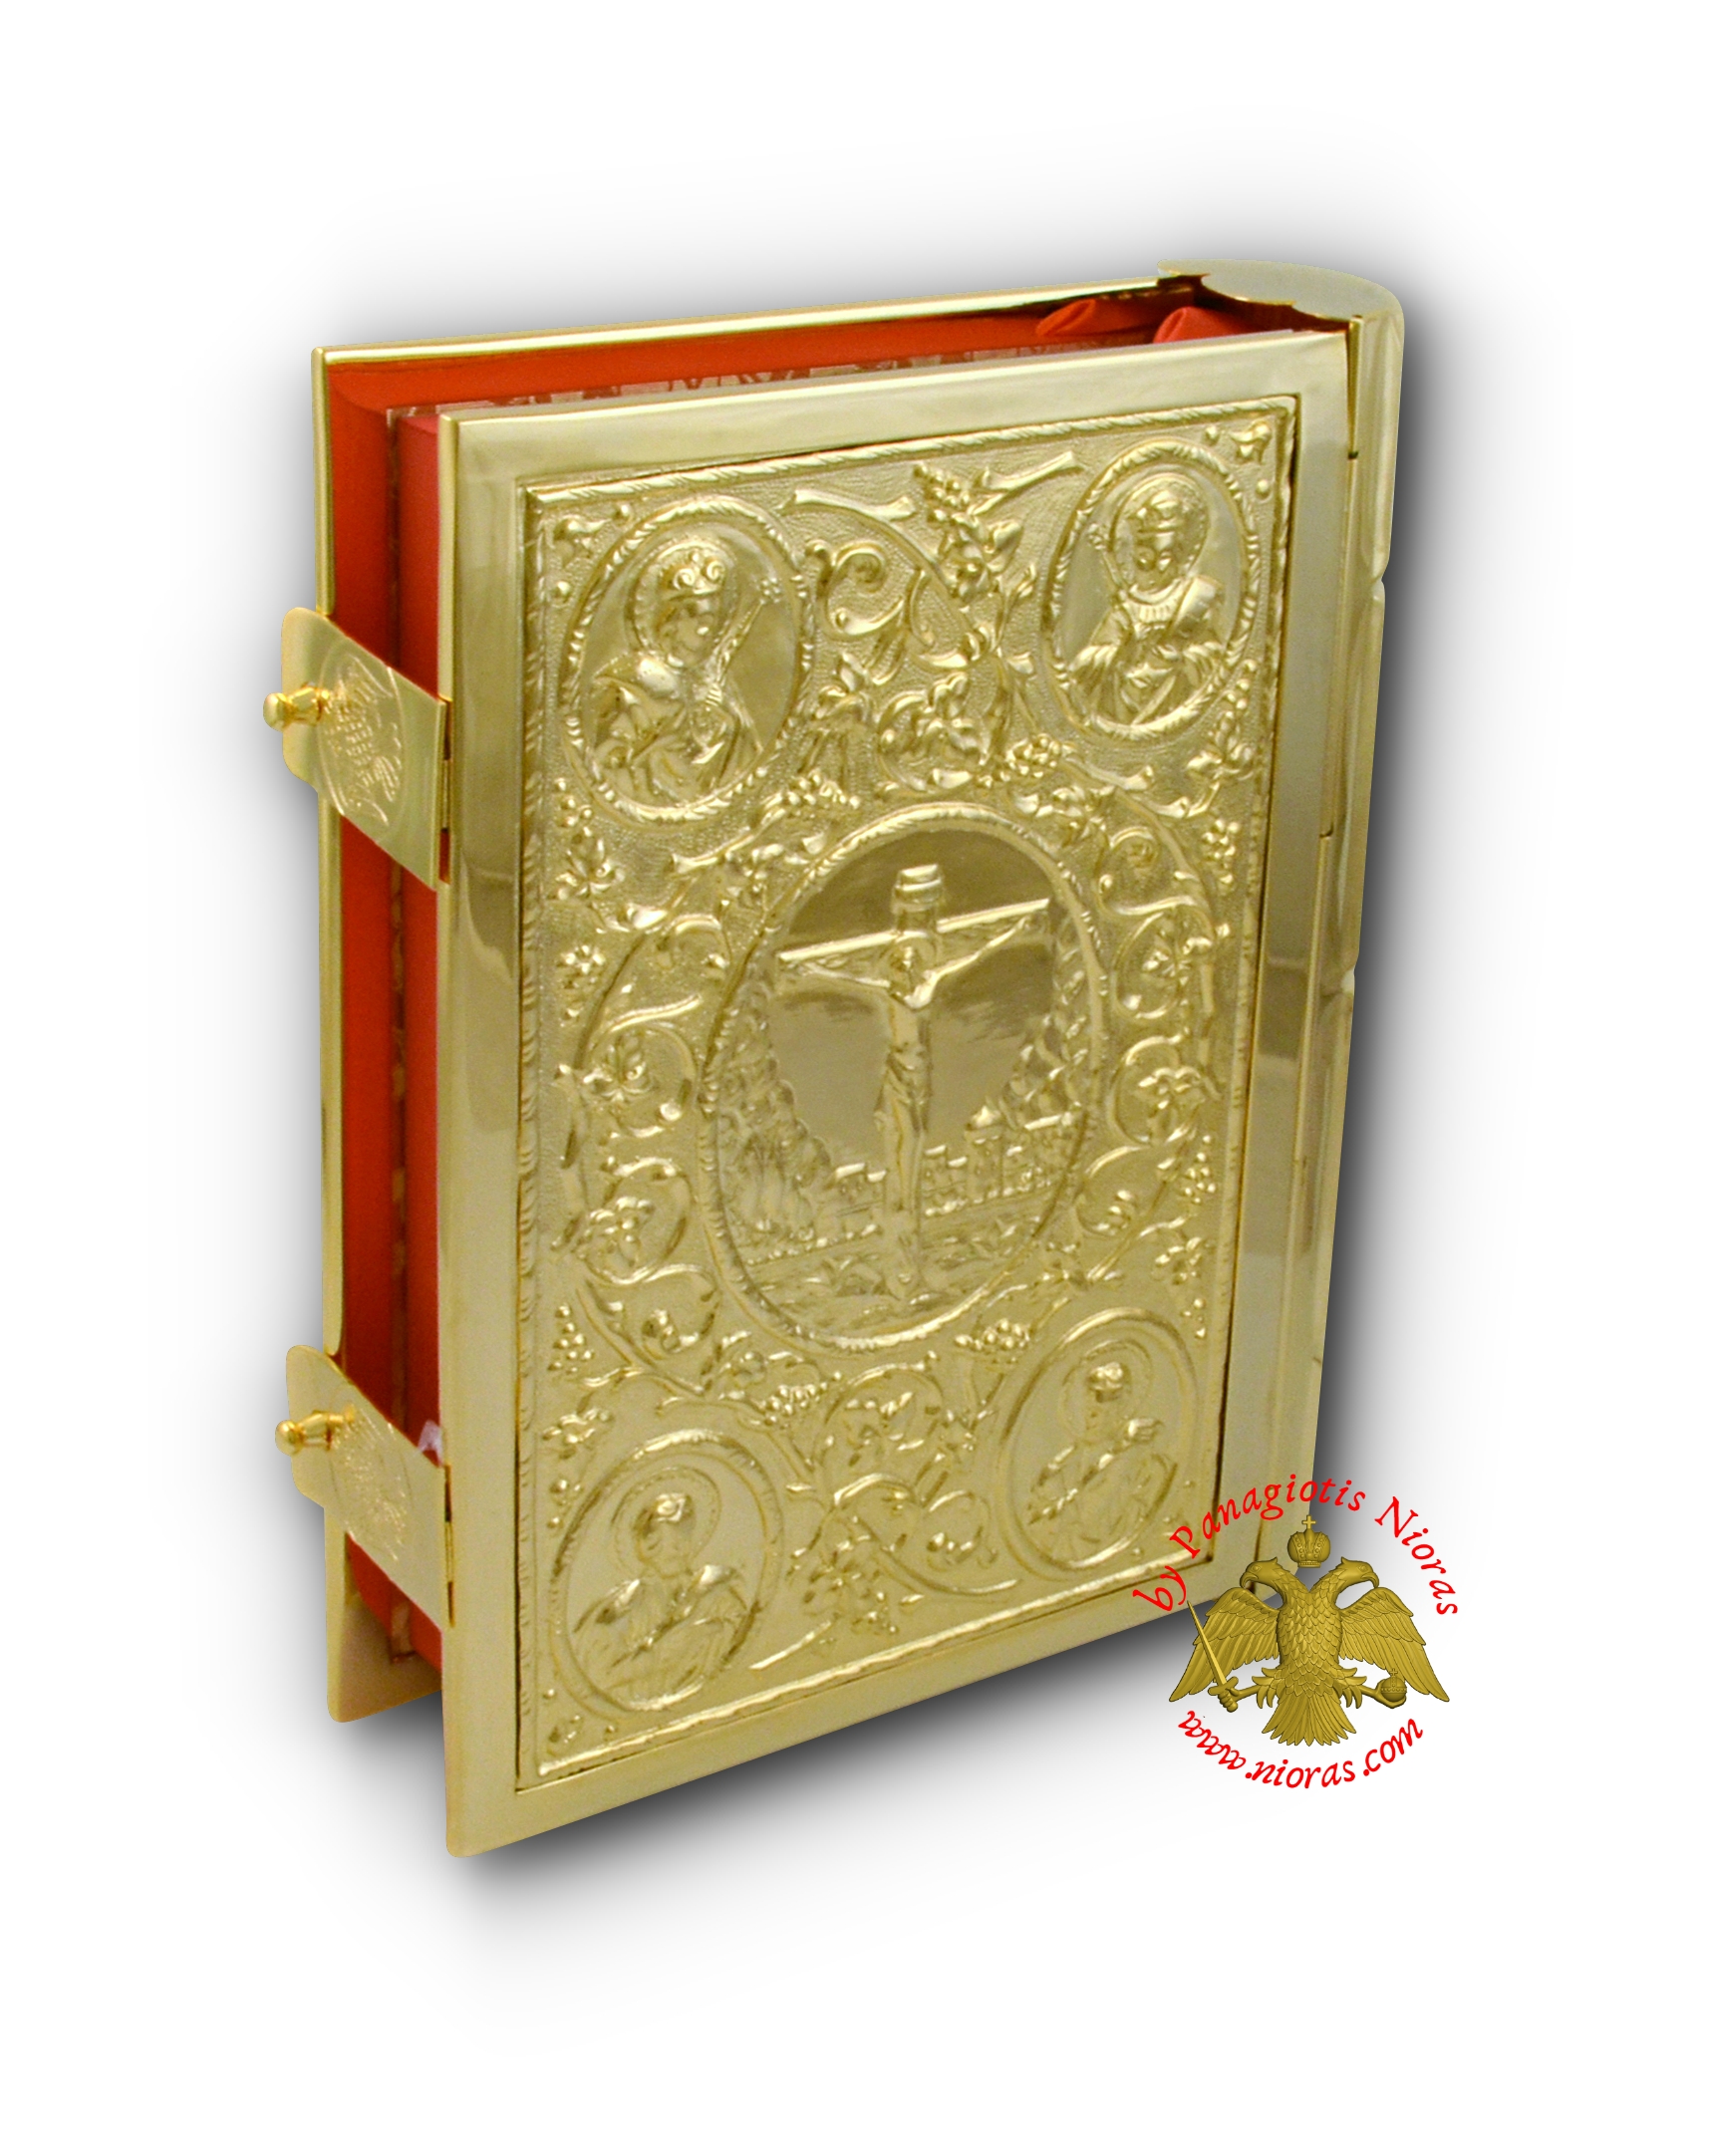 Holy Gospel Metal Cover Orthodox Church Vine Design Gold Plated 17x14x5cm English Text